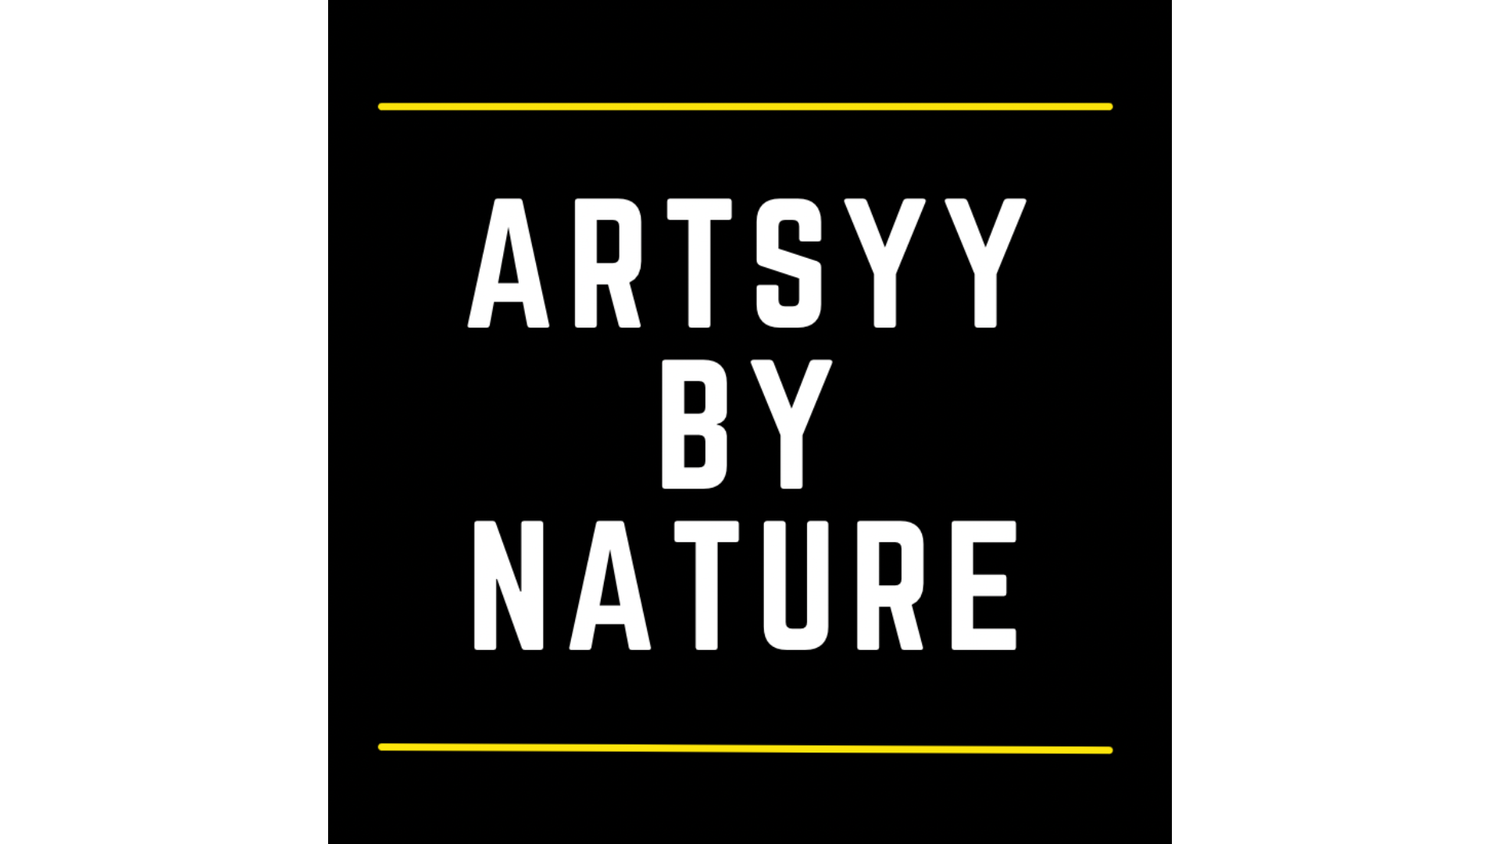 Artsyy By Nature